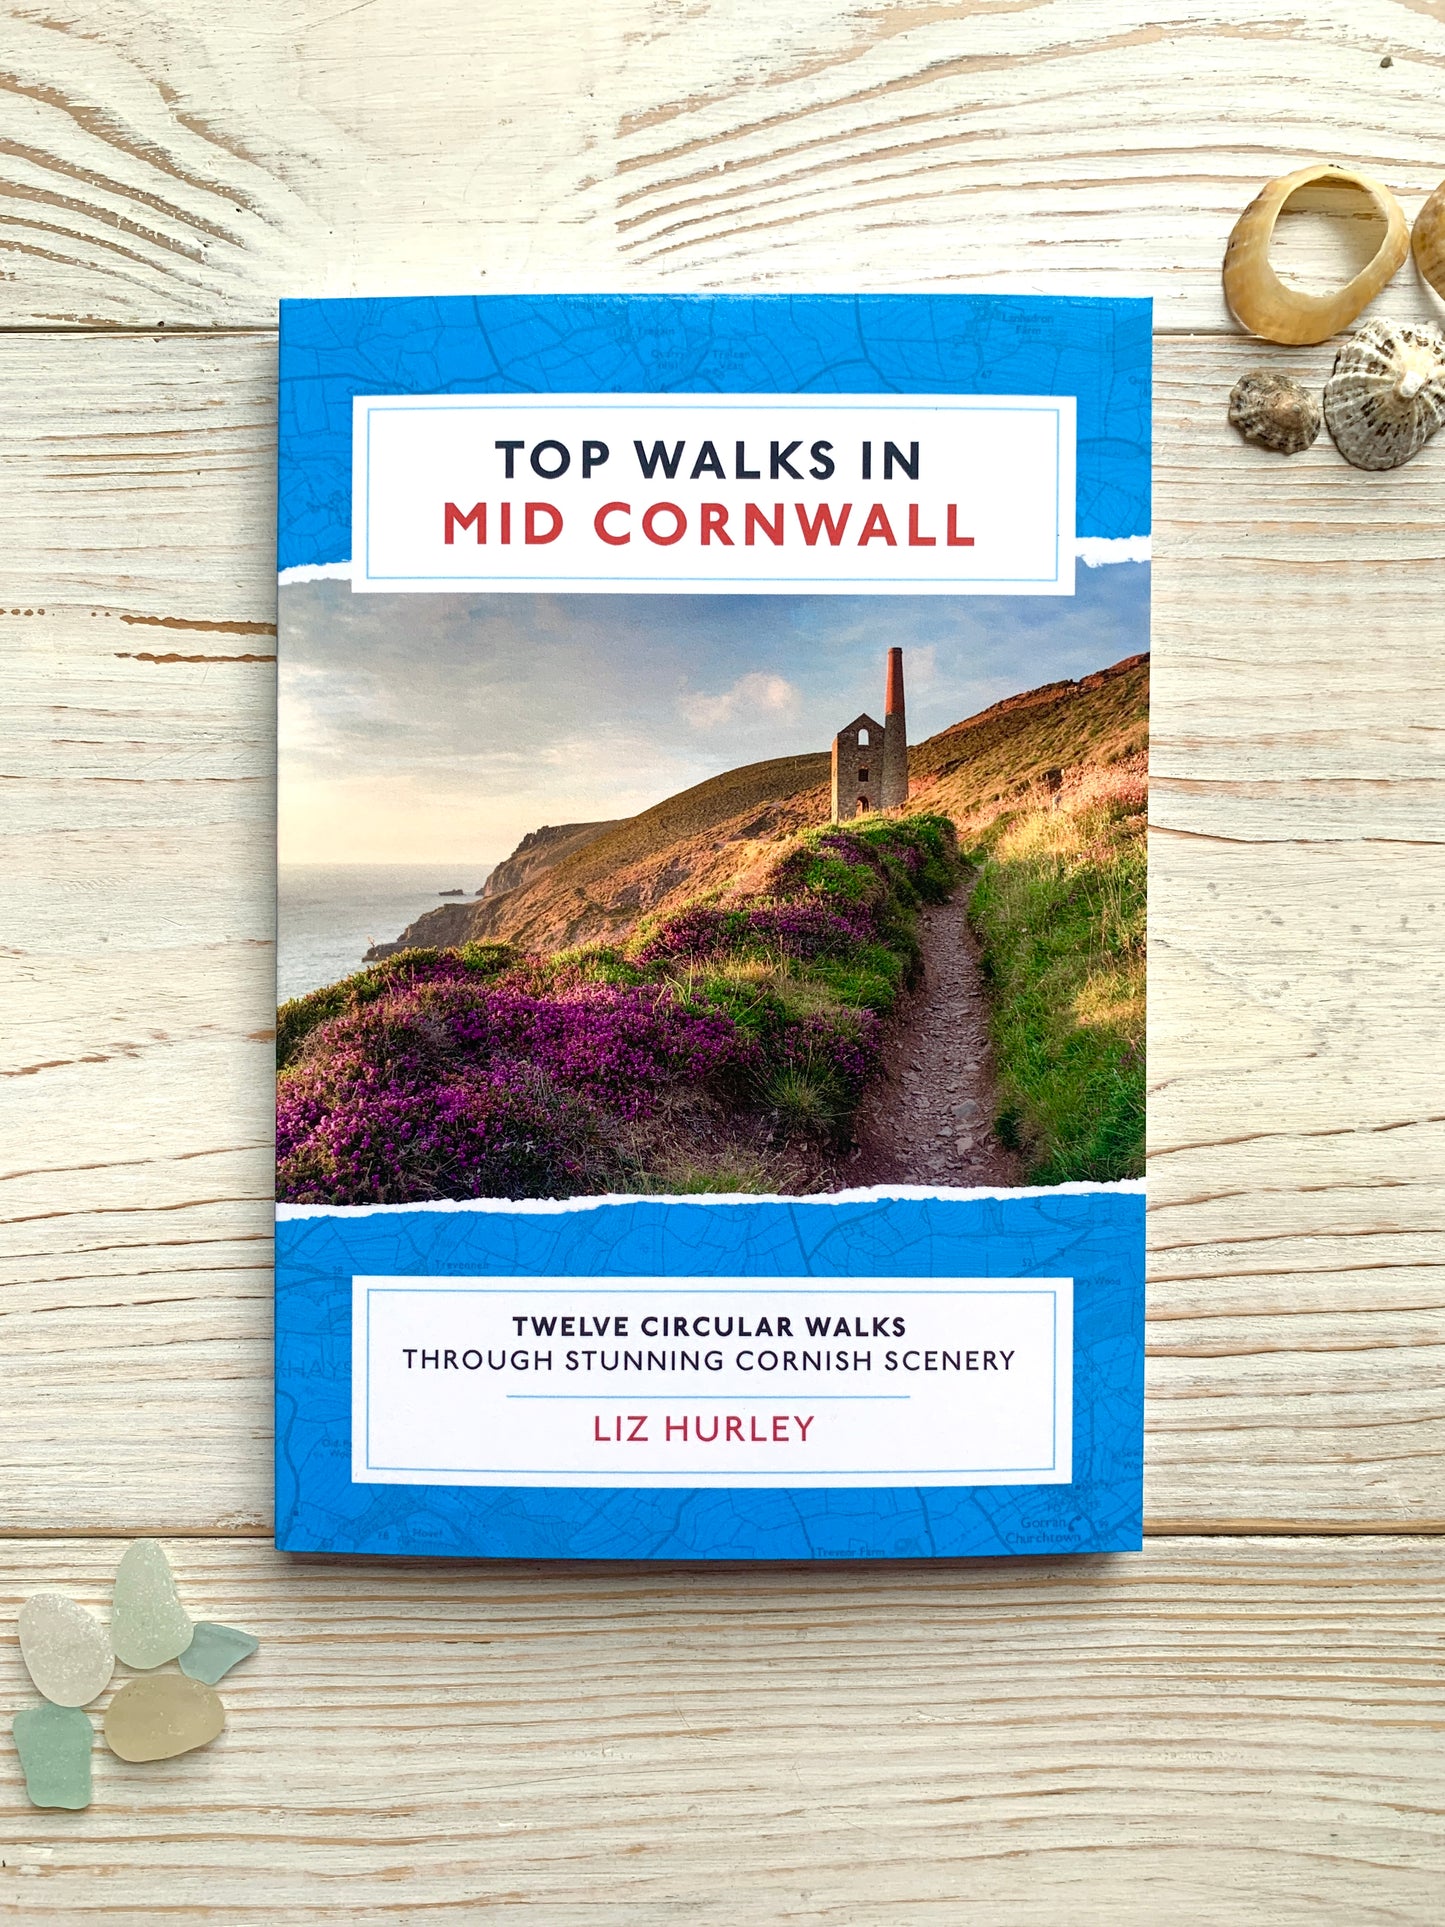 Top Walks in Mid Cornwall book